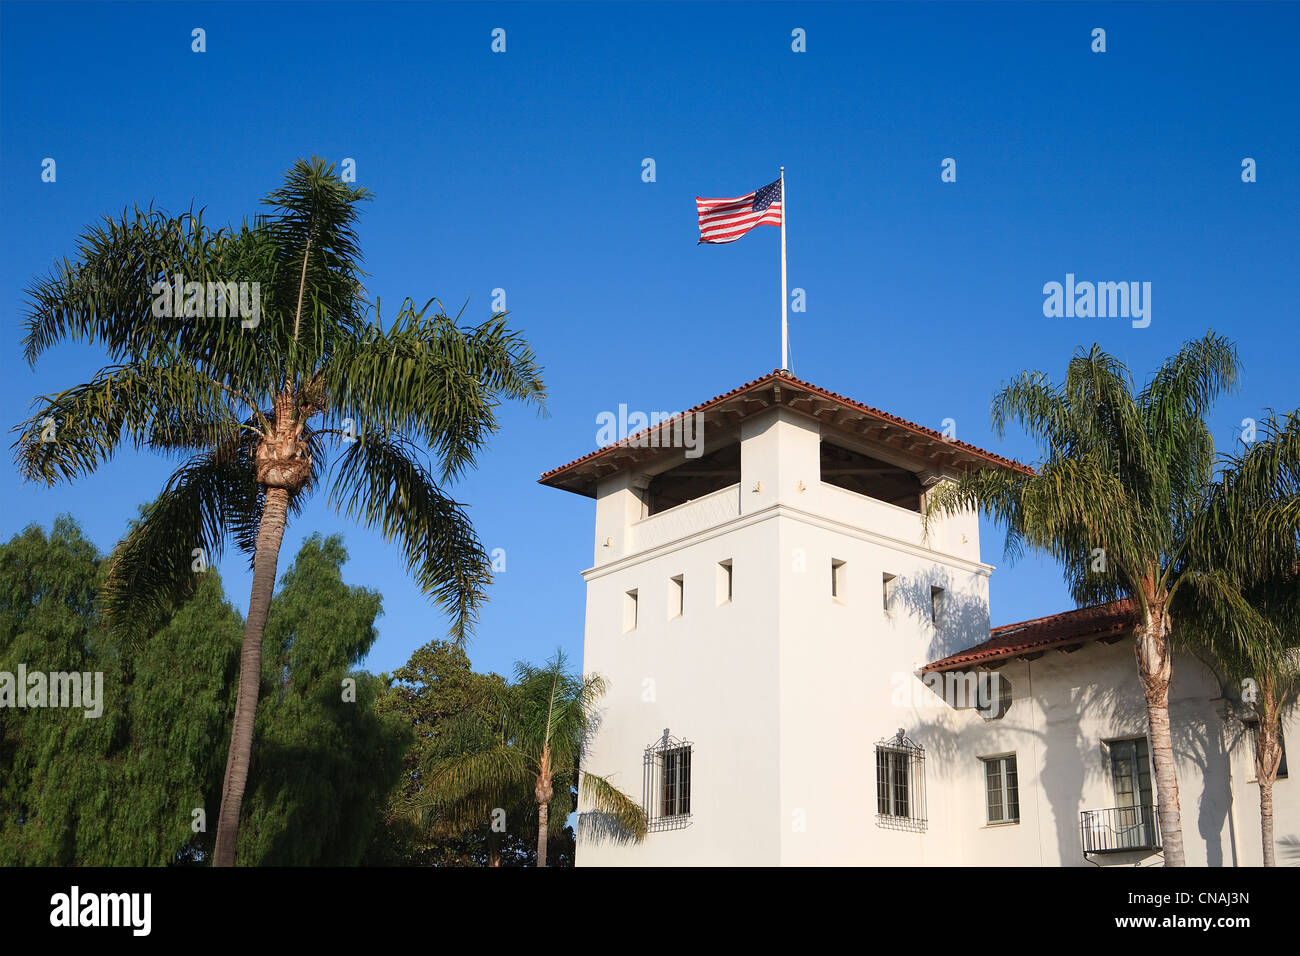 United States, California, Santa Barbara, Santa Barbara County Courthouse à Mission Revival, une tour de style néocolonial Banque D'Images